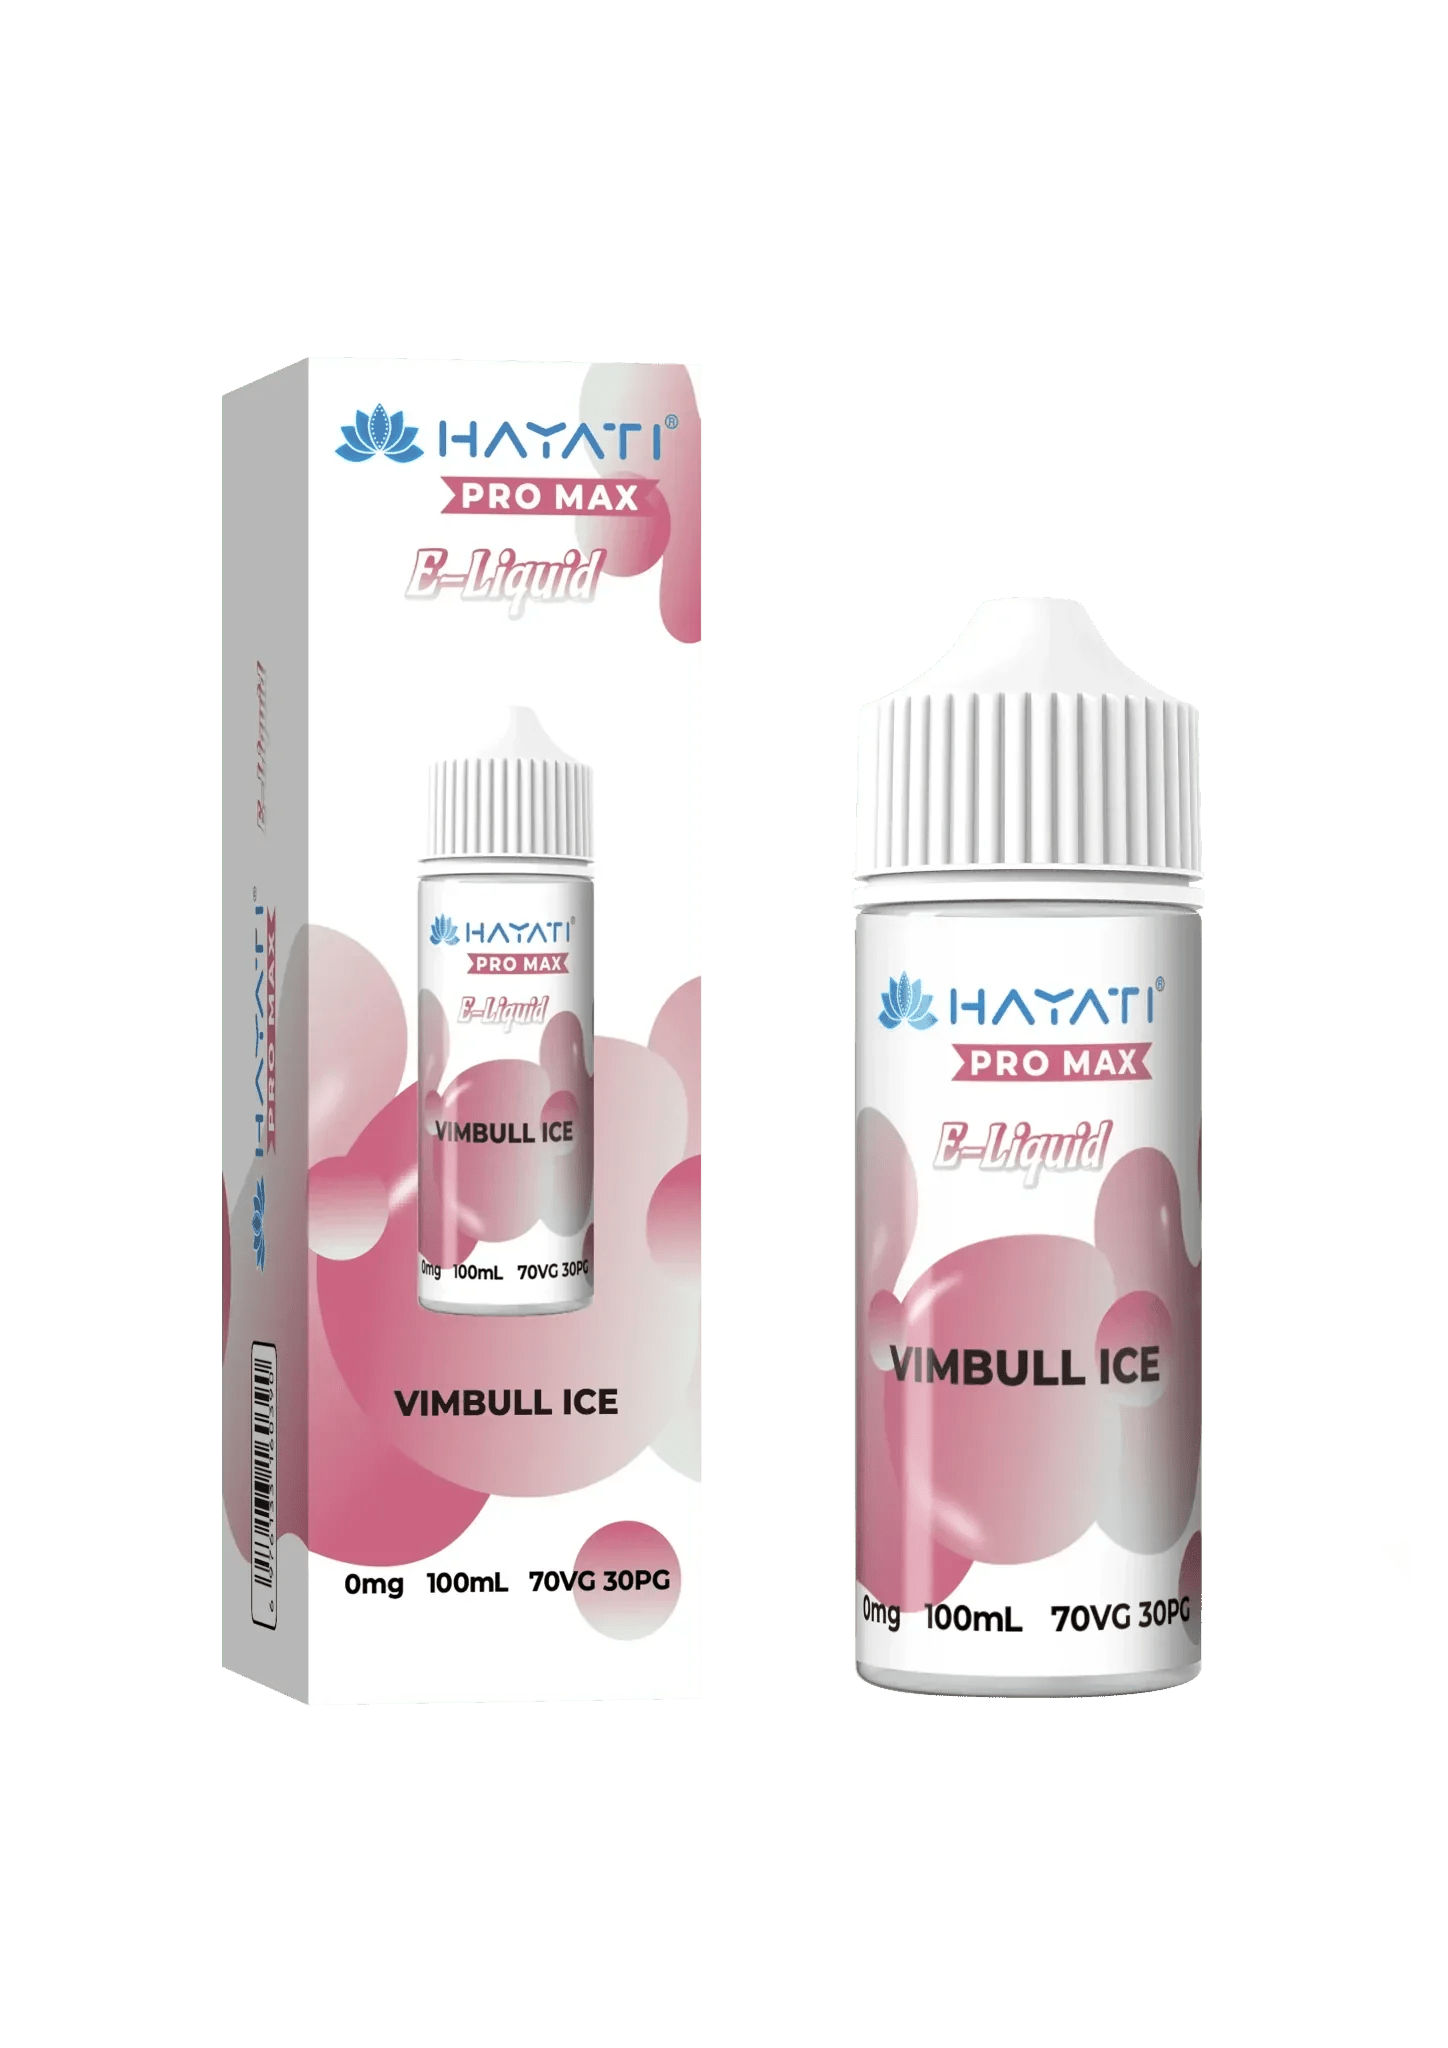 Hayati Pro Max E-liquid 100ml - Wolfvapes.co.uk-Vimbull Ice